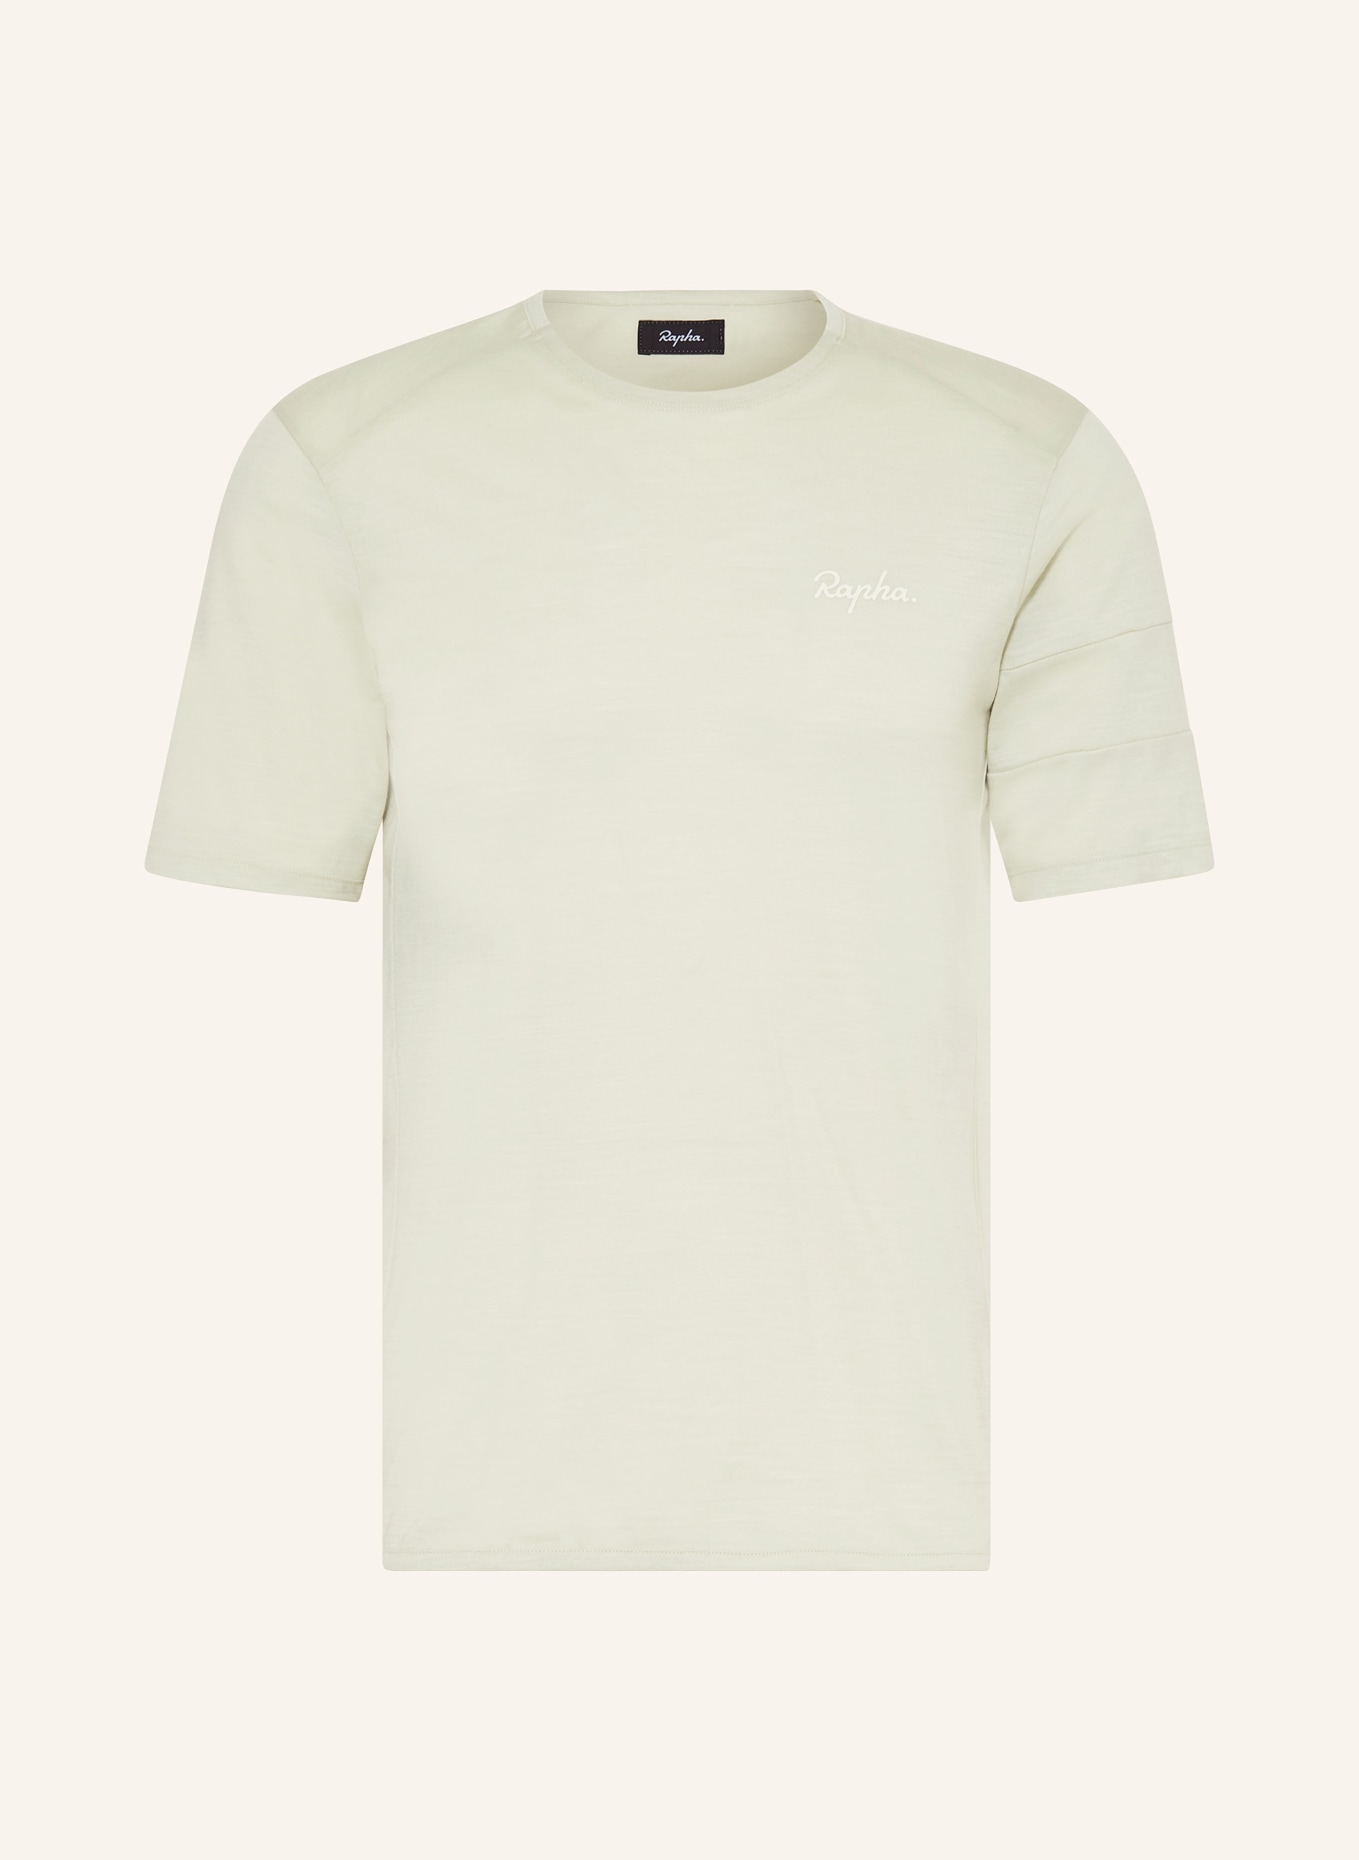 Rapha T-Shirt EXPLORE mit Merinowolle, Farbe: MINT (Bild 1)